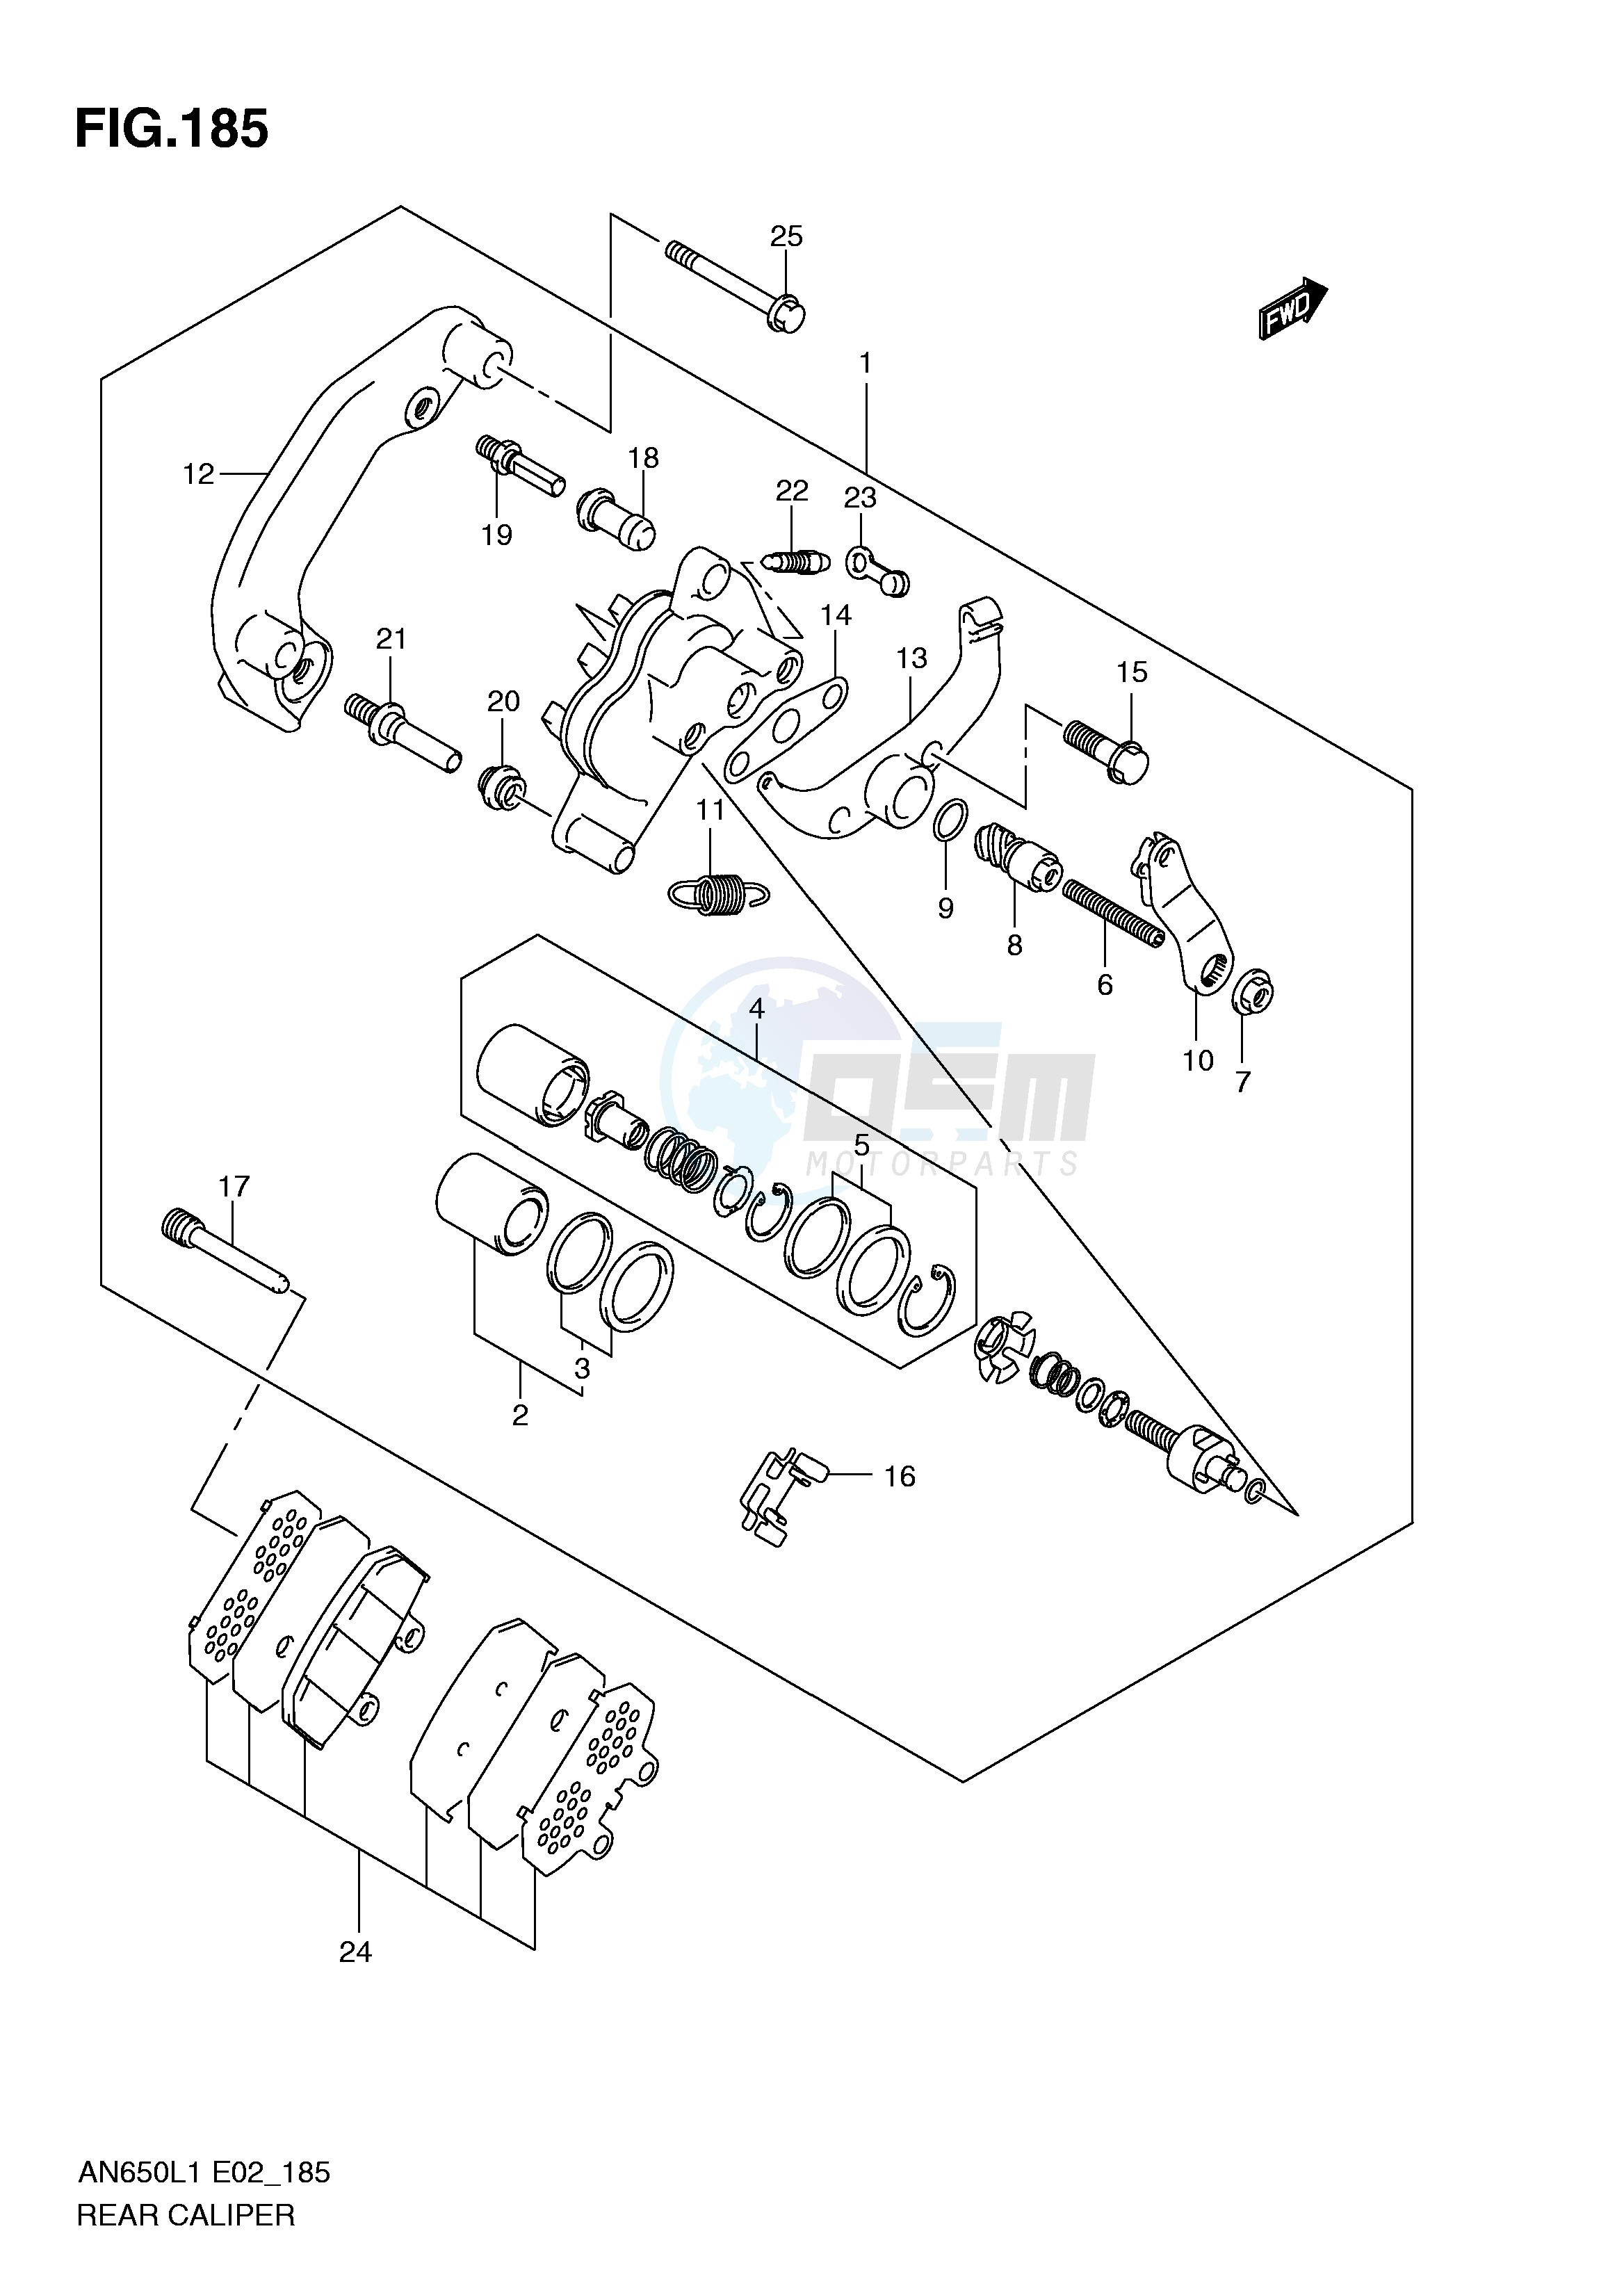 REAR CALIPER (AN650AL1 E19) blueprint